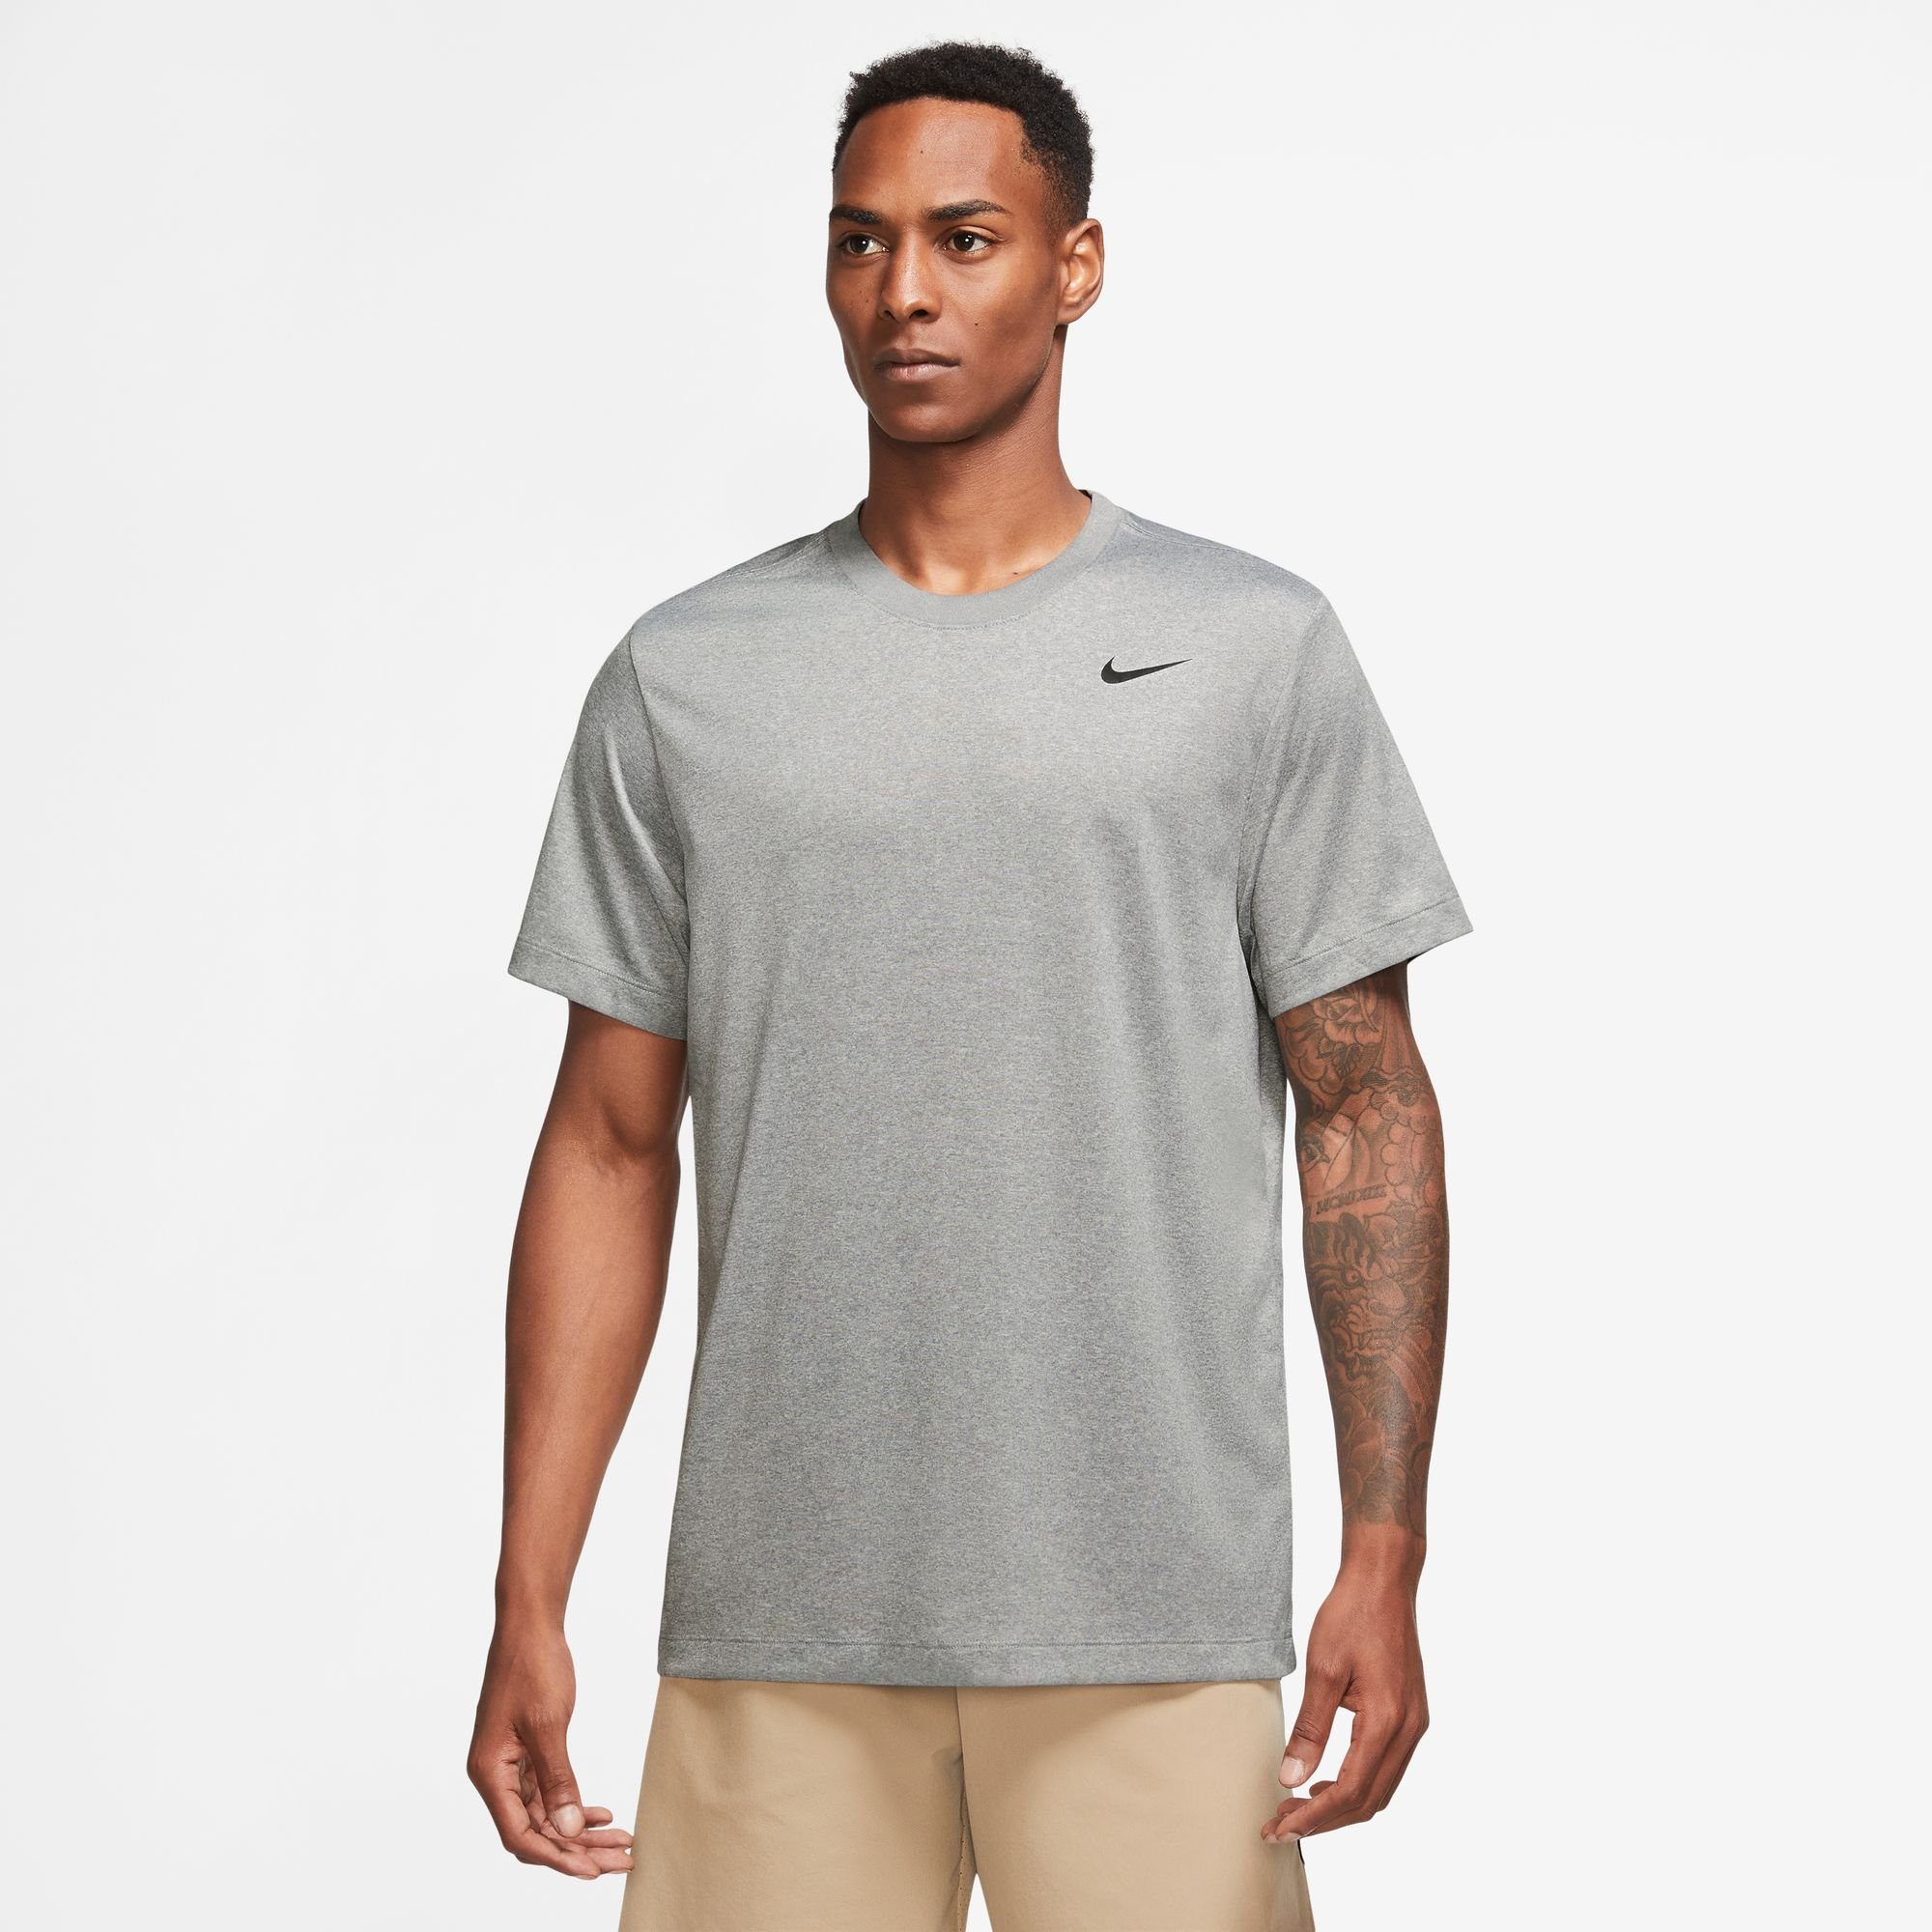 DRI-FIT Nike FITNESS LEGEND T-SHIRT GREY/FLT TUMBLED Trainingsshirt SILVER/HTR/BLACK MEN'S